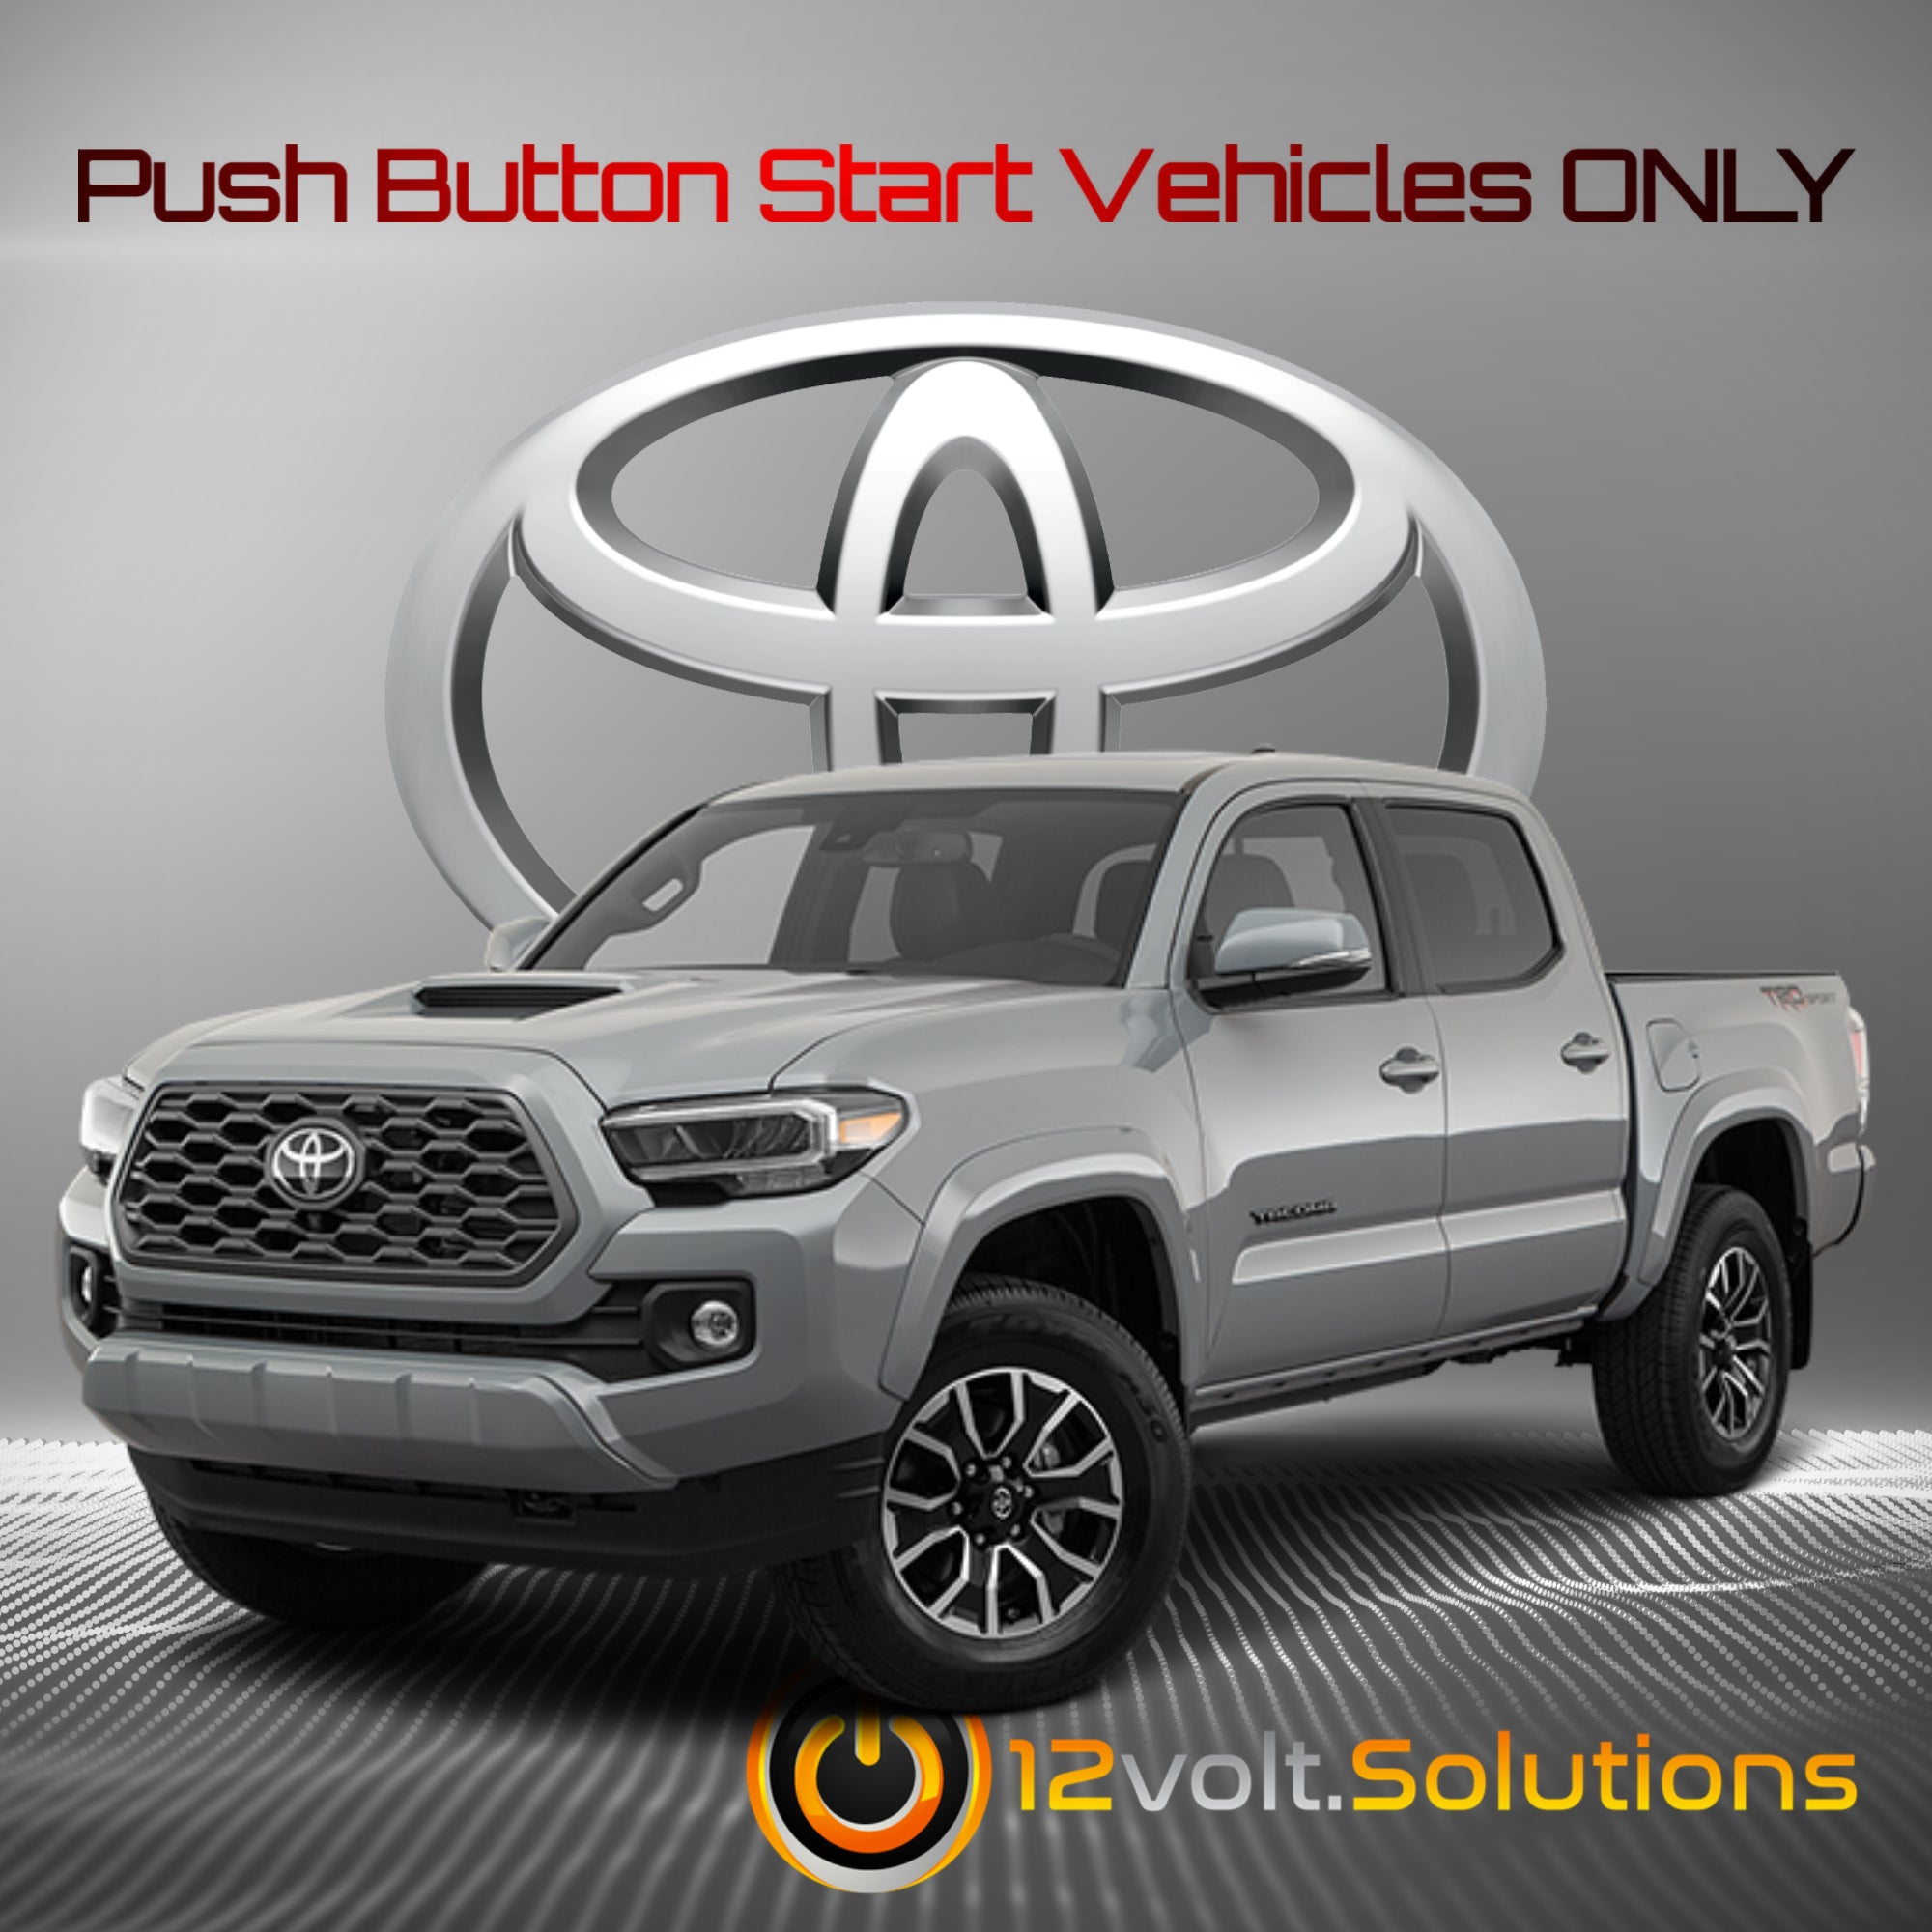 2020-2021 Toyota Tacoma Plug & Play Remote Start Kit (Push Button Start)-12Volt.Solutions